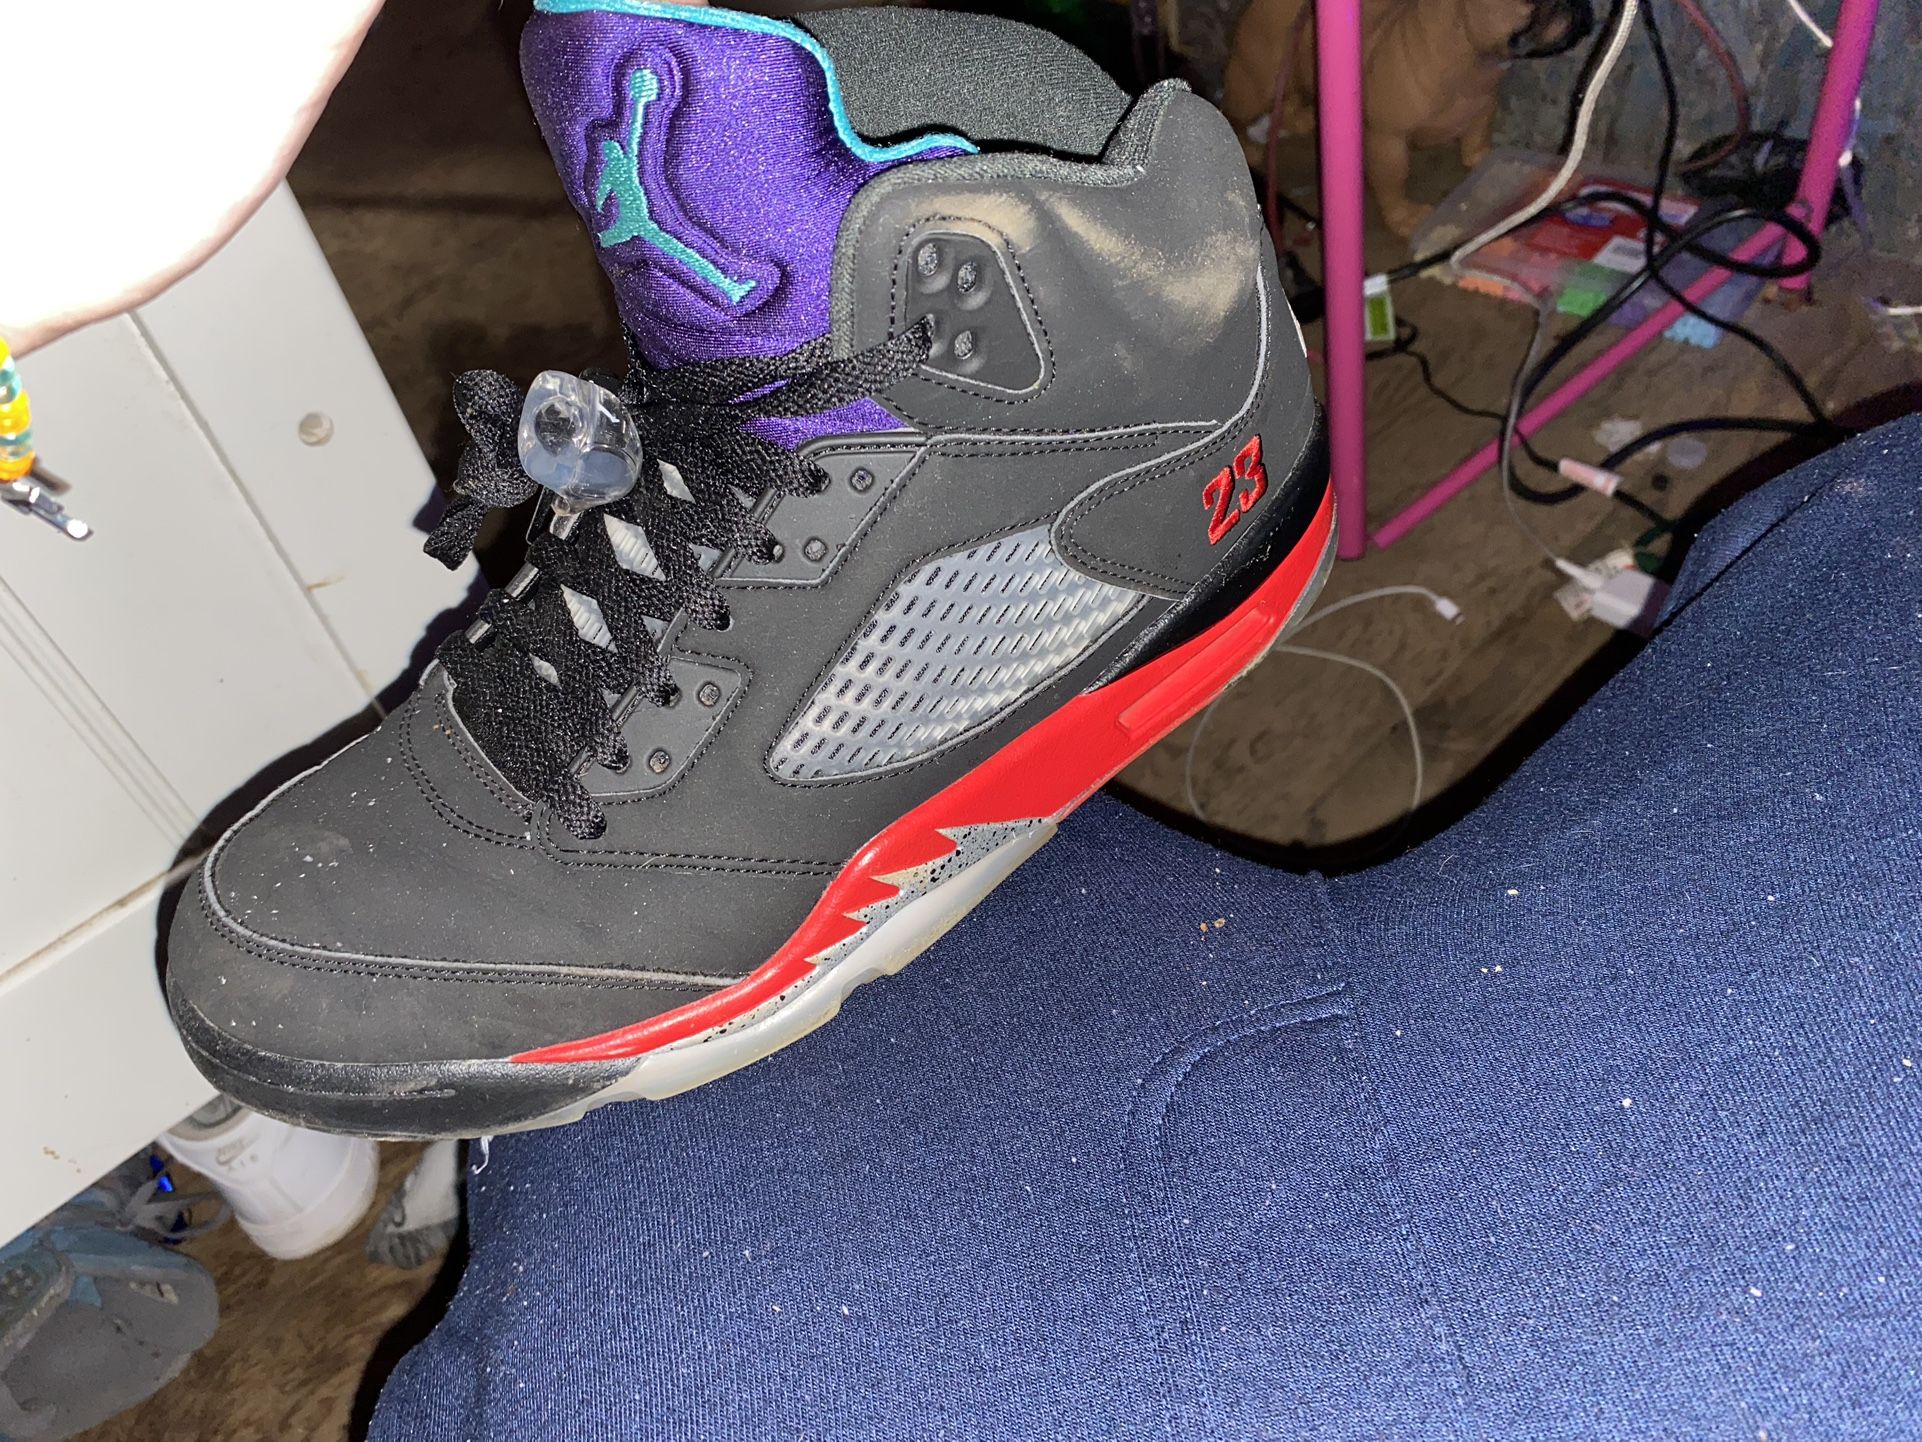 Jordan 12 N 5s Yes I Have Both Shoes N Boxes 